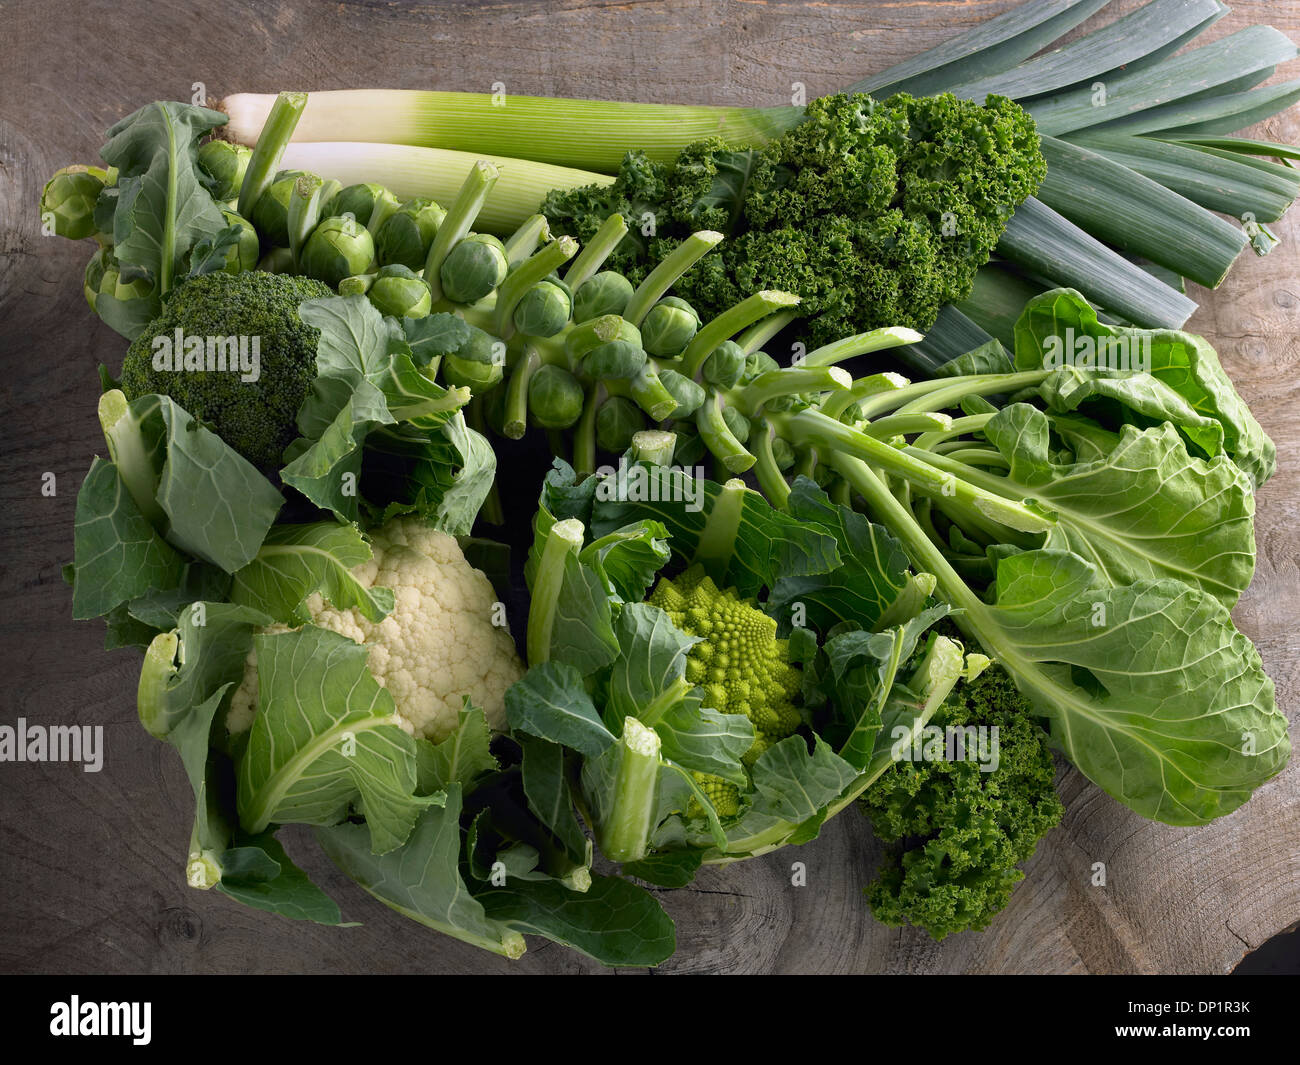 green leaf vegetables Stock Photo